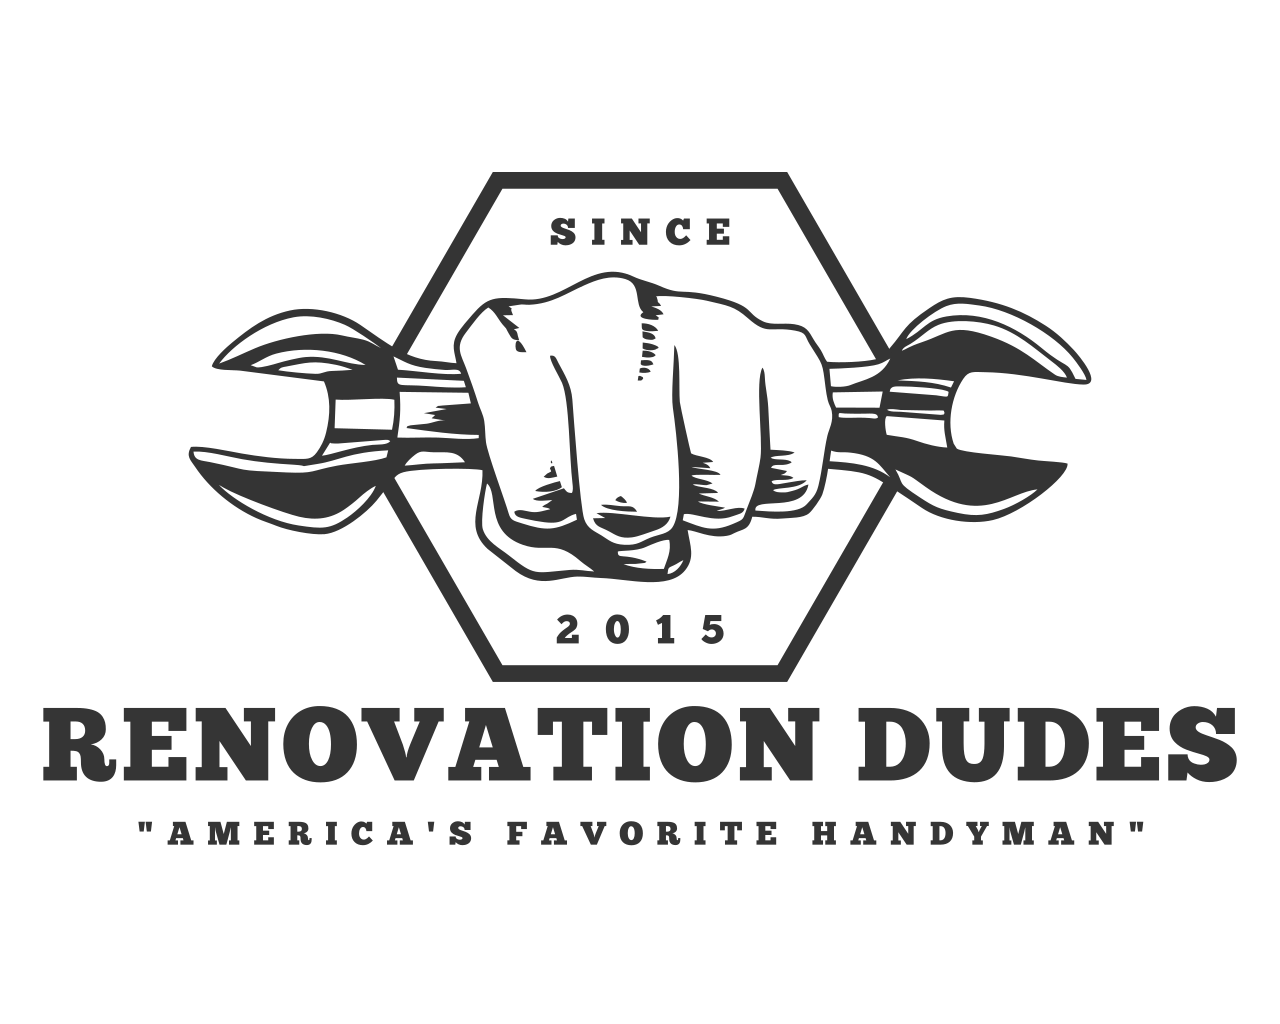 Renovation Dudes's logo